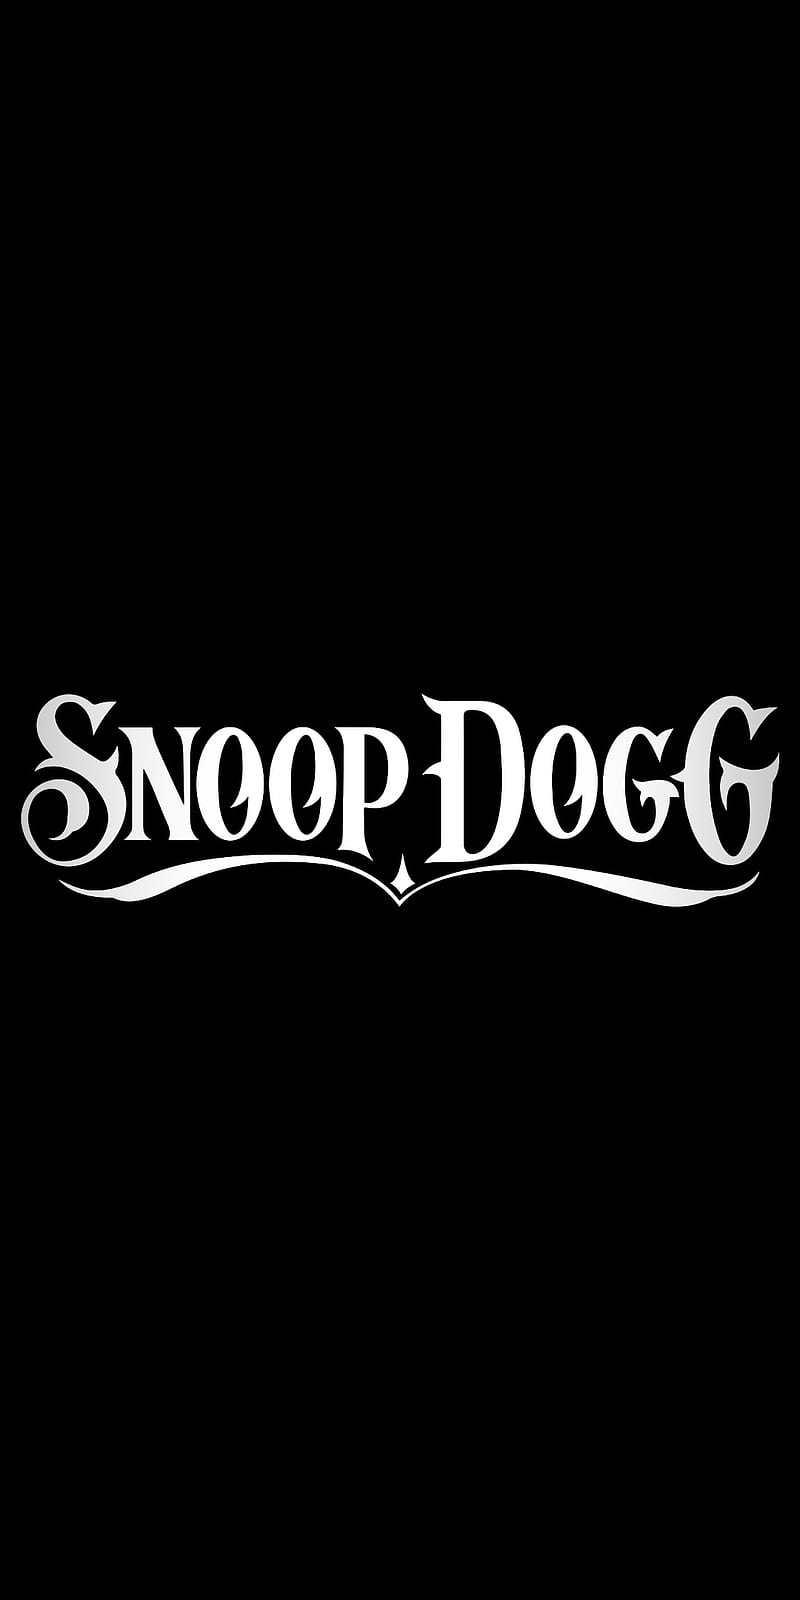 tupac and snoop dogg wallpaper